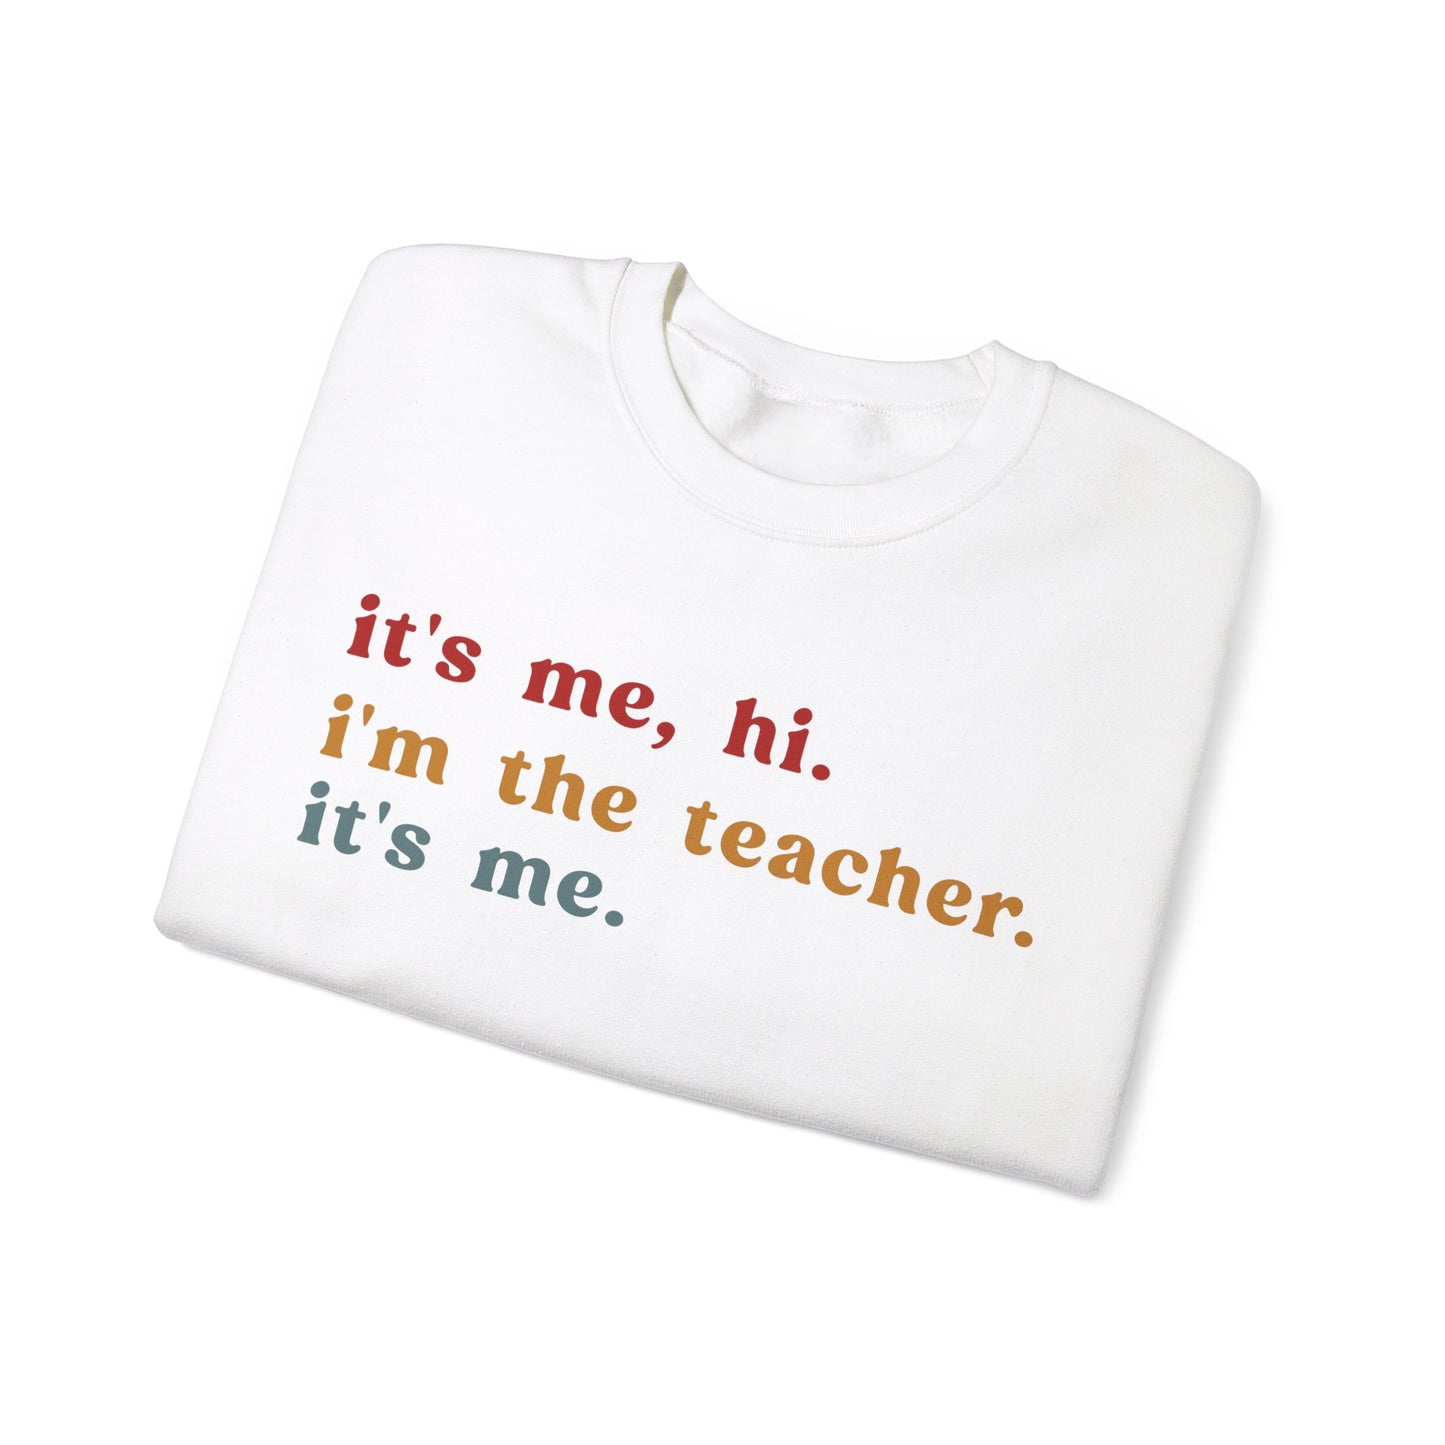 It's Me Hi I'm The Teacher It's Me Sweatshirt, Best Teacher Sweatshirt, Elementary Teacher, Teacher Appreciation Sweatshirt, S1150